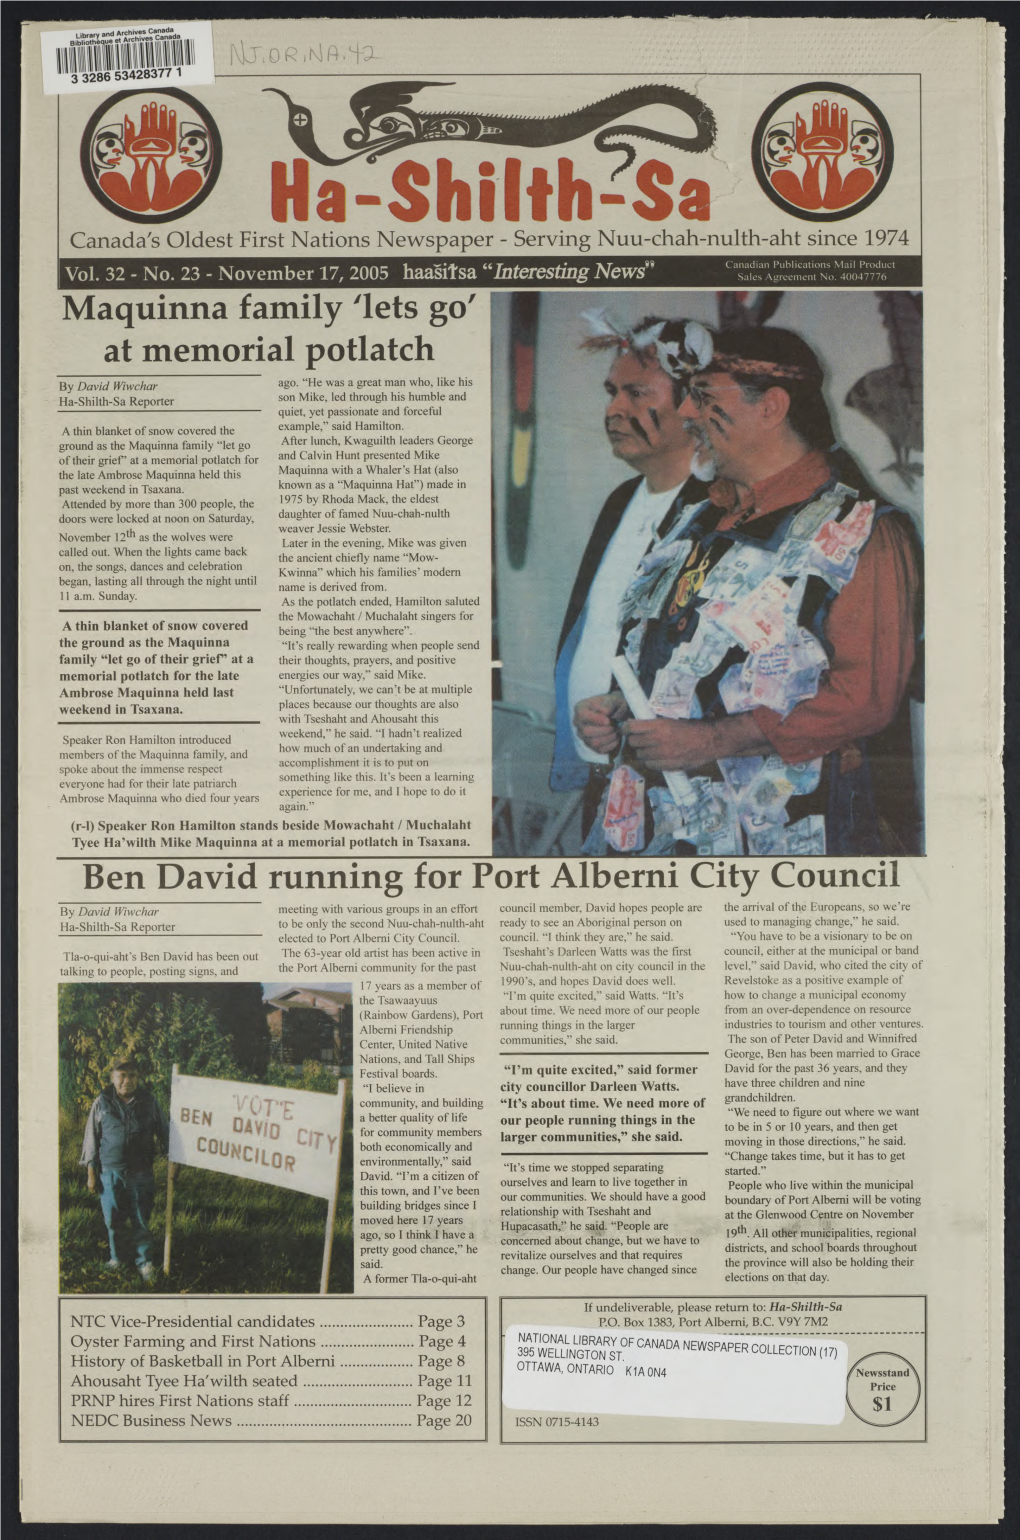 Ben David Running for Port Alberni City Council